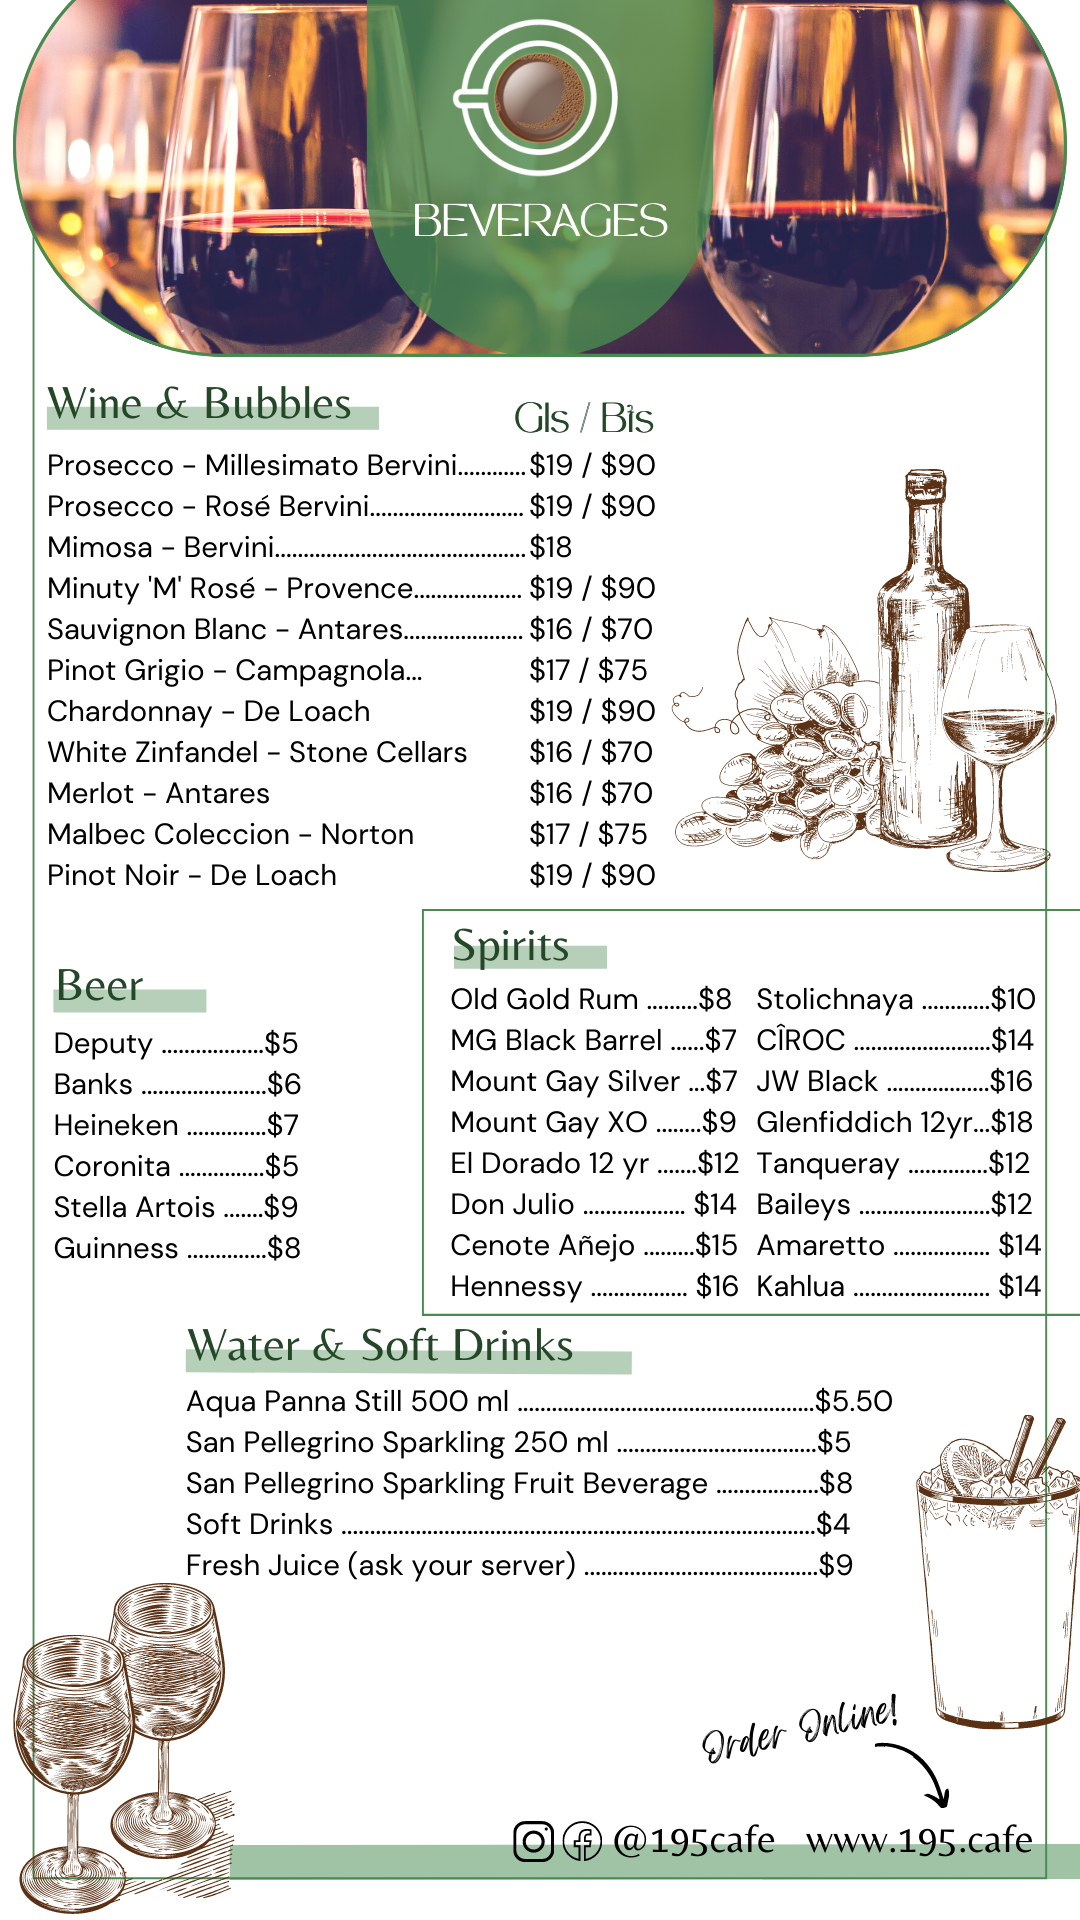 alcohol menu